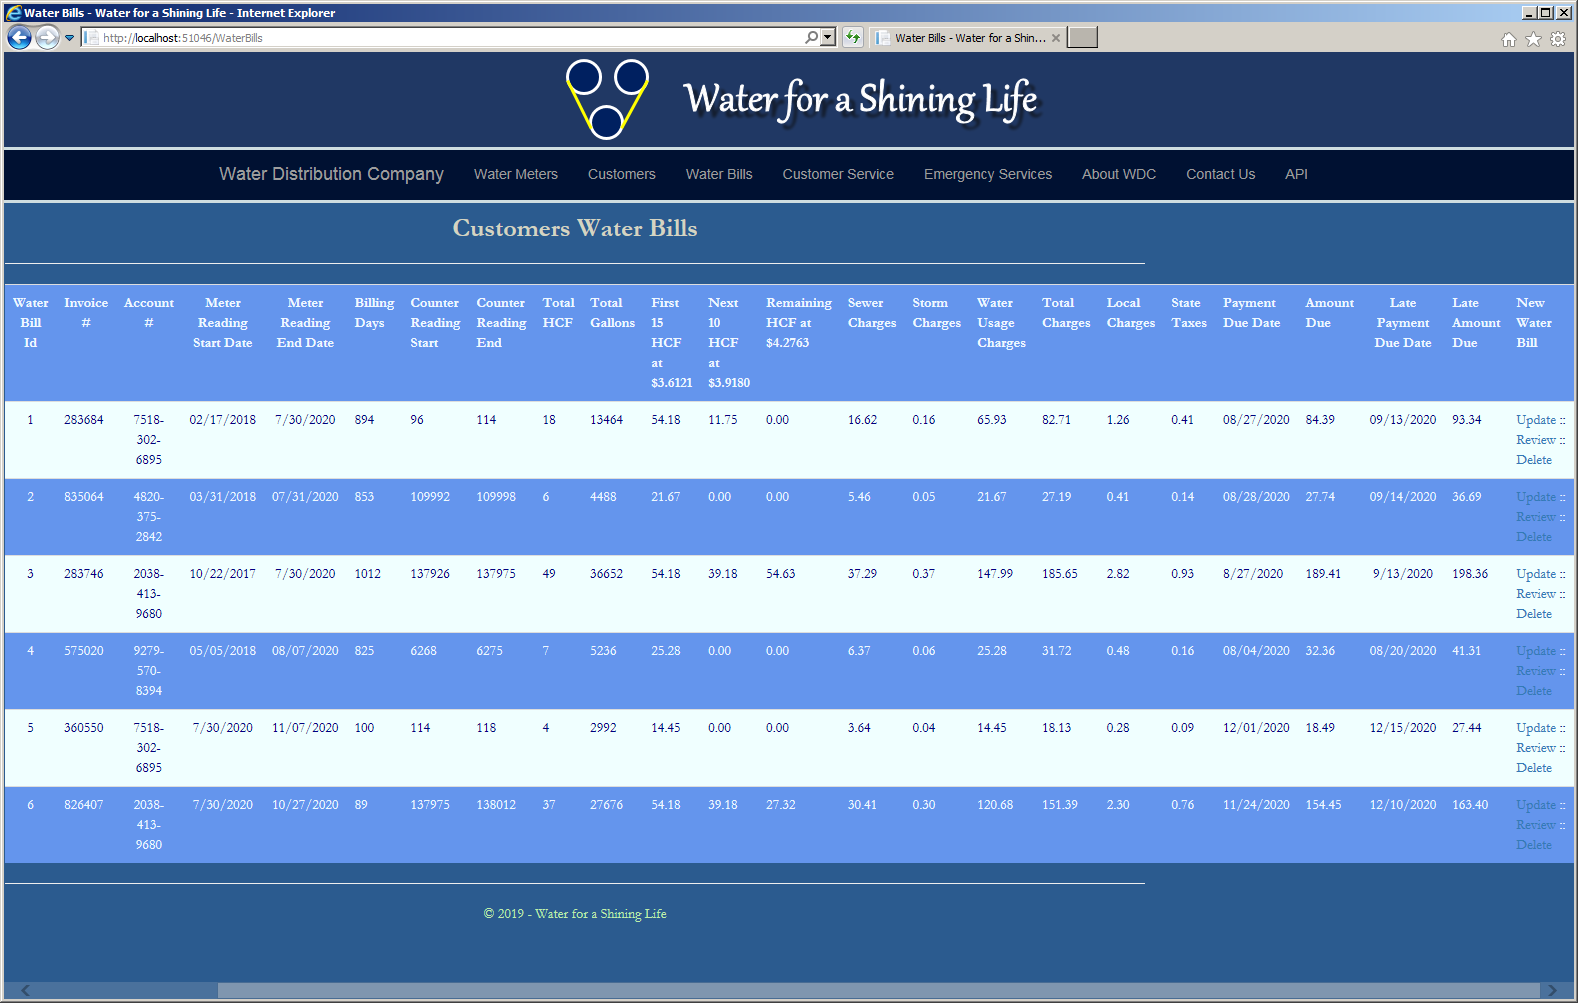 Water Distribution Comapny - Water Bills